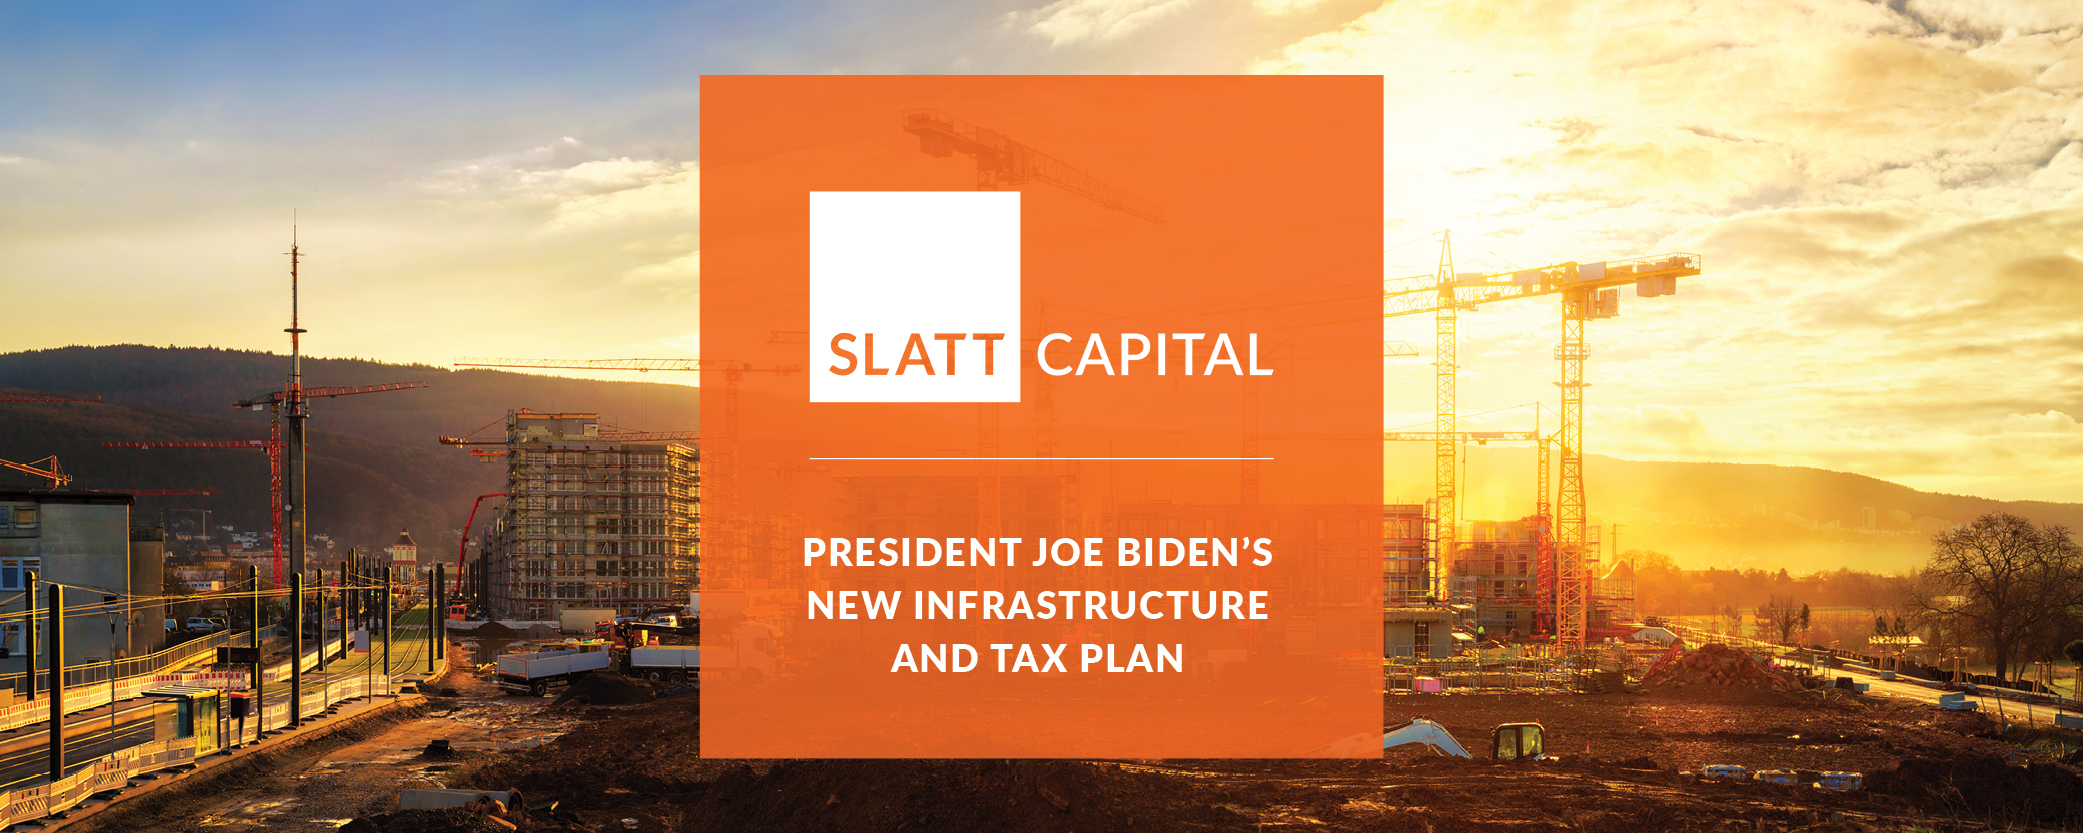 President joe biden’s new infrastructure and tax plan